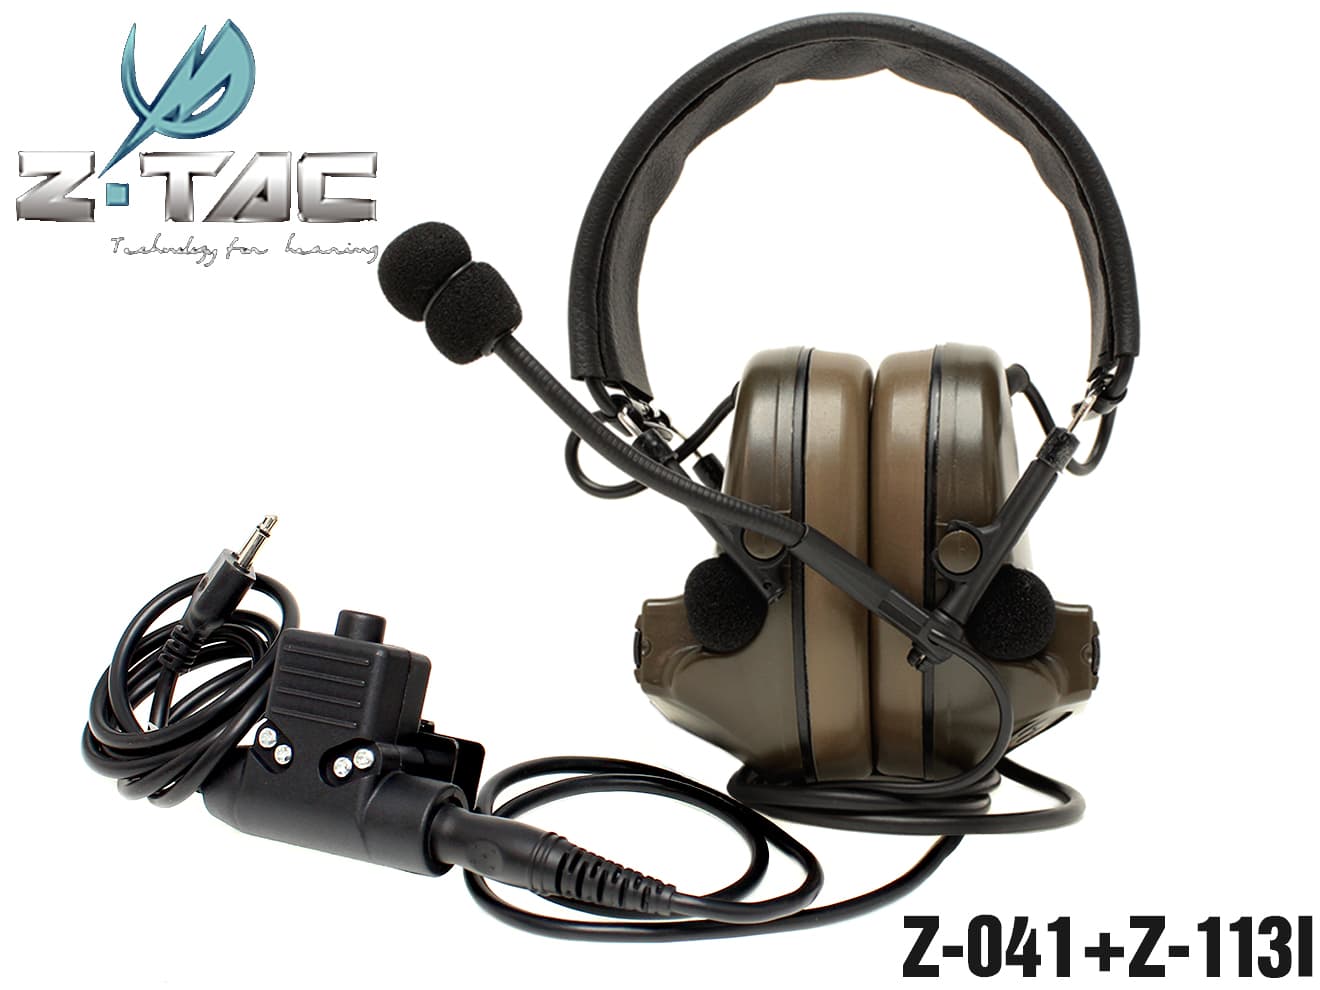 Z-TACTICAL CMTC 2ヘッドセット+ICOM用U94タイプPTTスイッチ セット